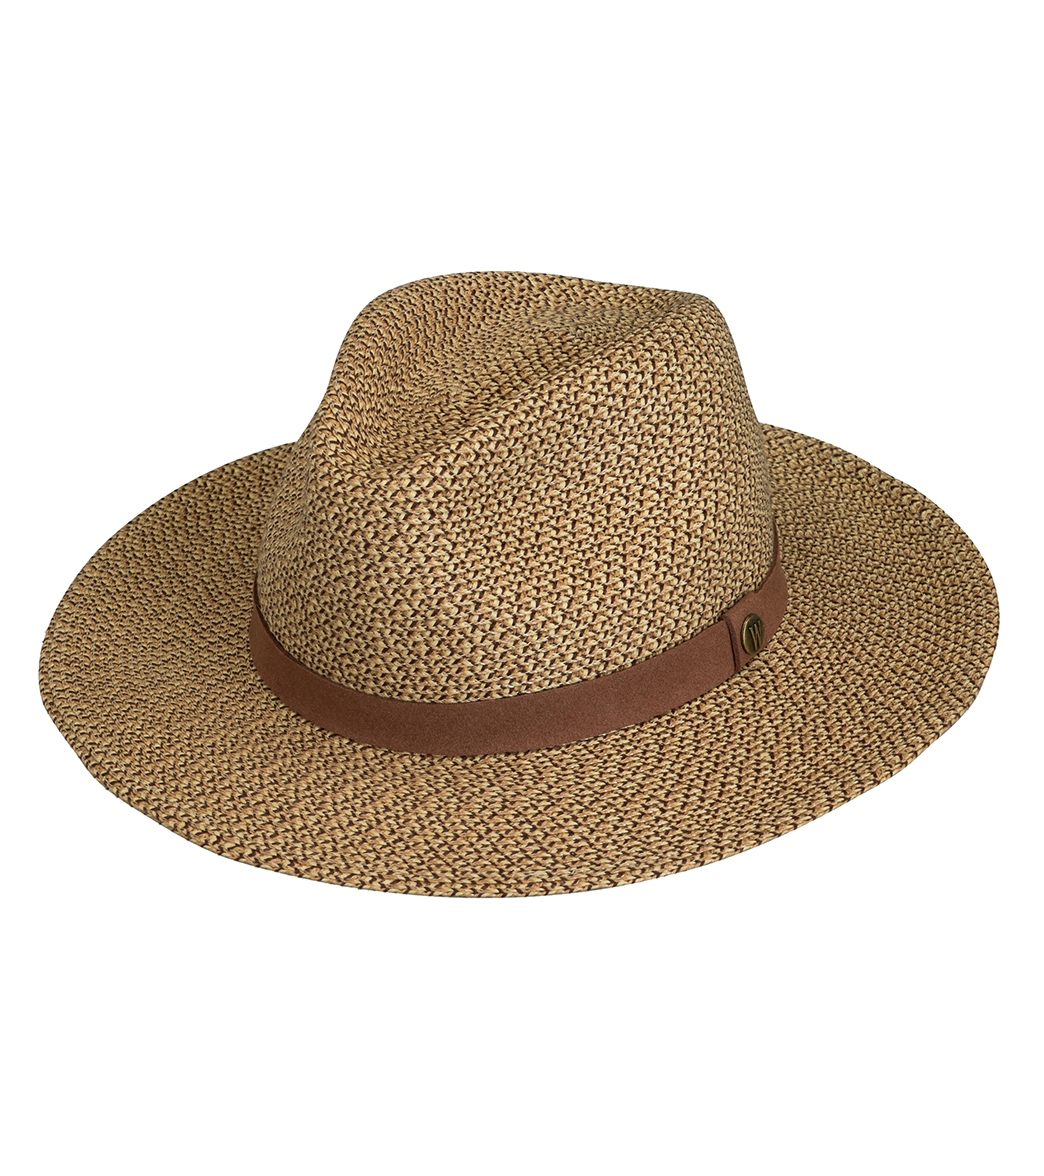 Wallaroo Men's Outback Sun Hat - Brown Large/Xl - Swimoutlet.com